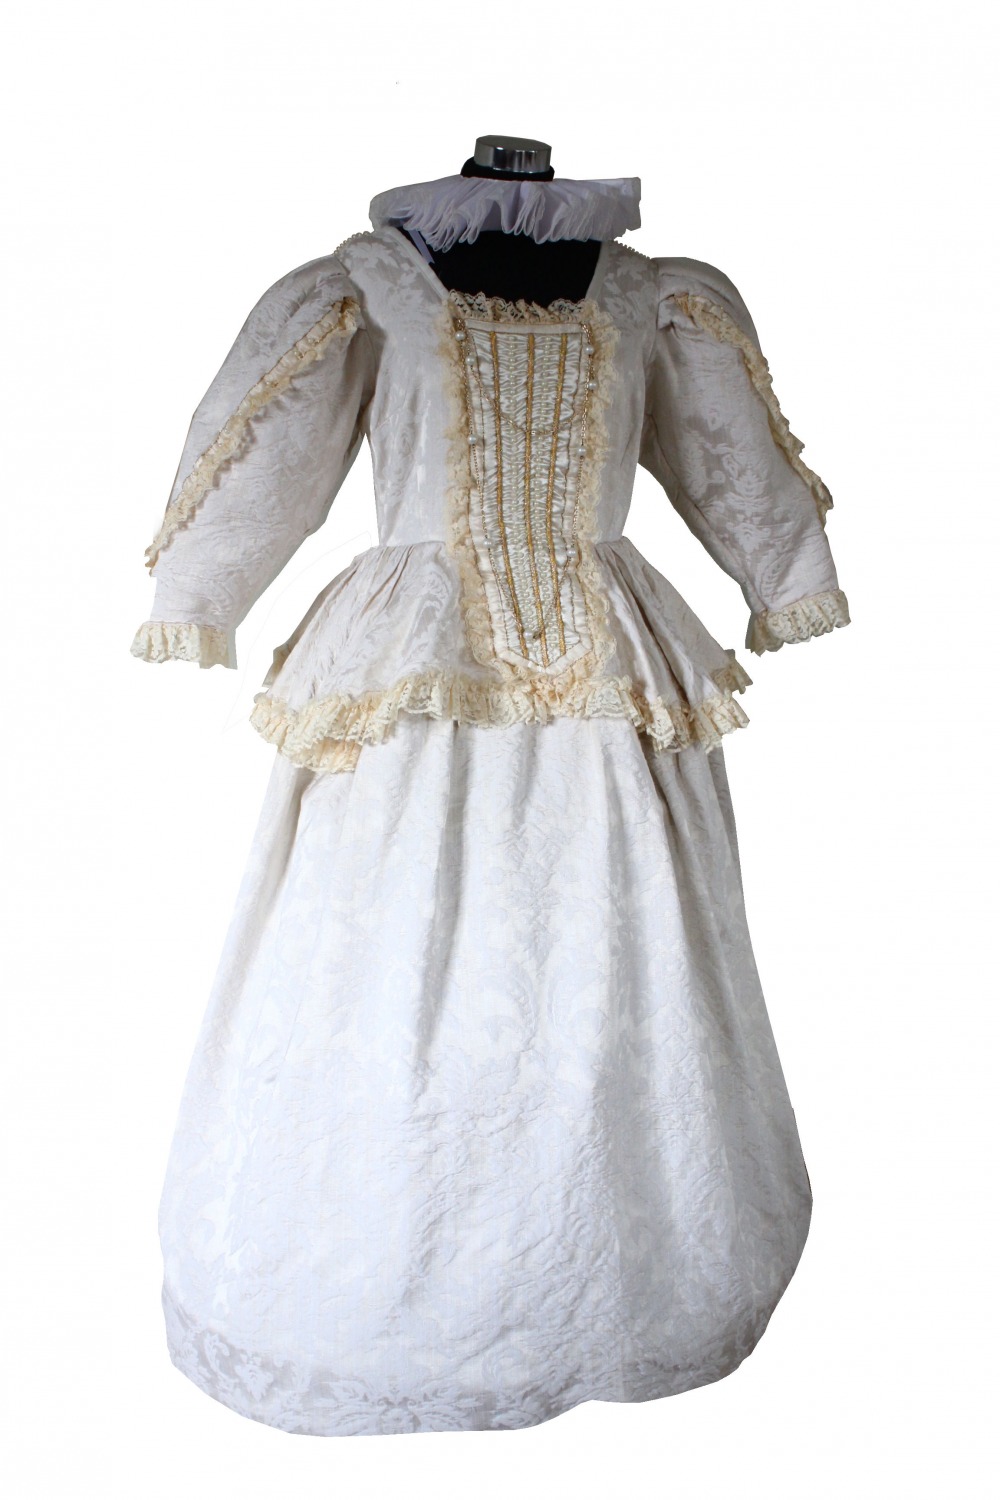 Ladies Deluxe Tudor Elizabethan Queen Elizabeth 1 Costume Size 14 - 16 Image